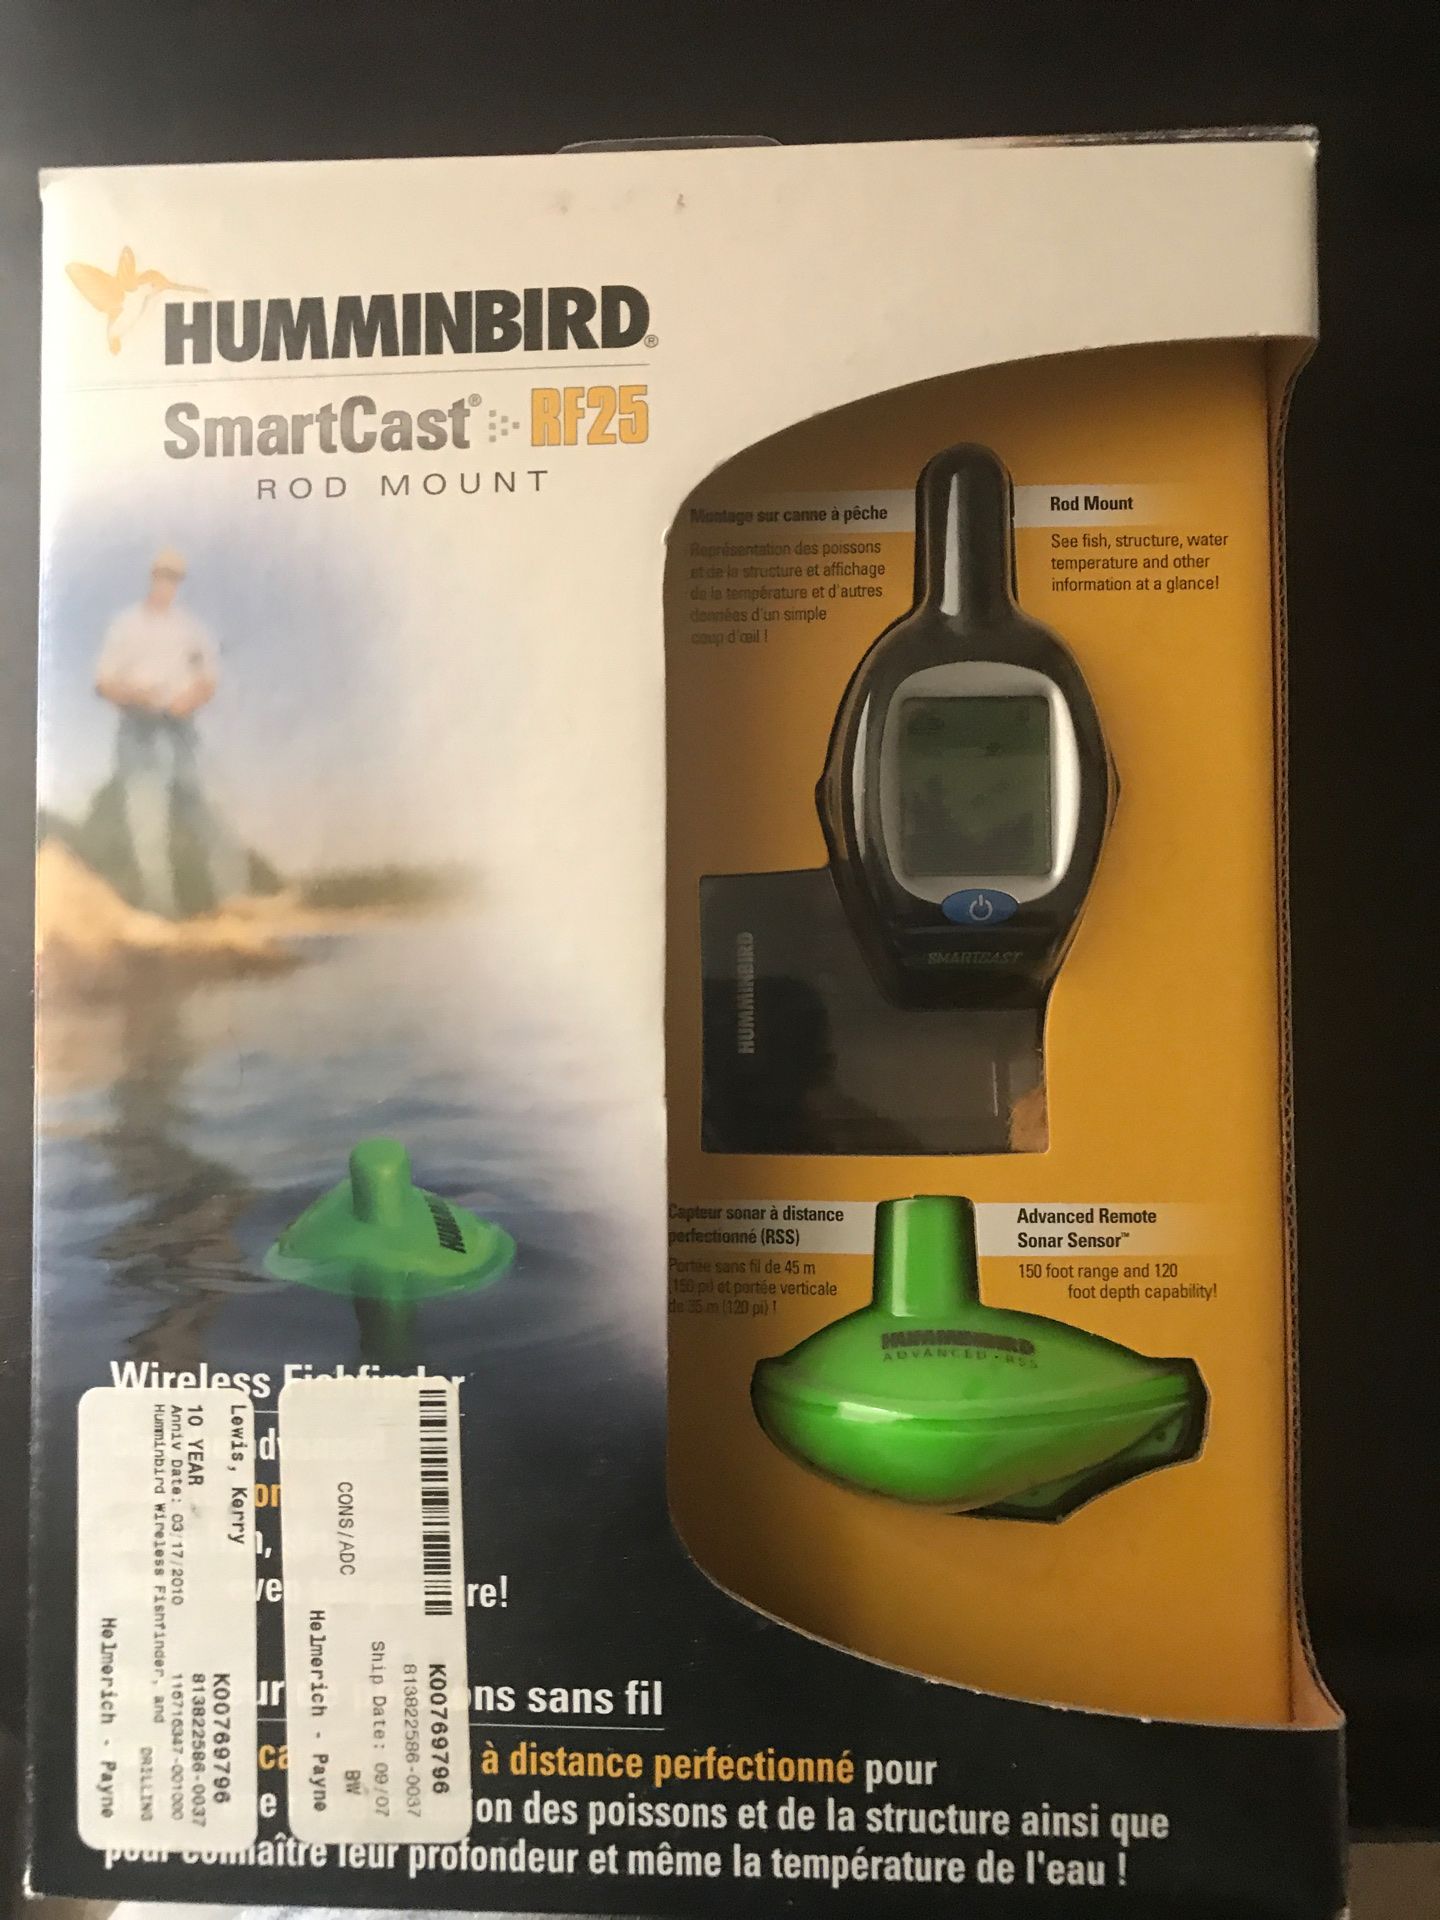 Hummingbird smart cast rf 25 rod mount fish finder